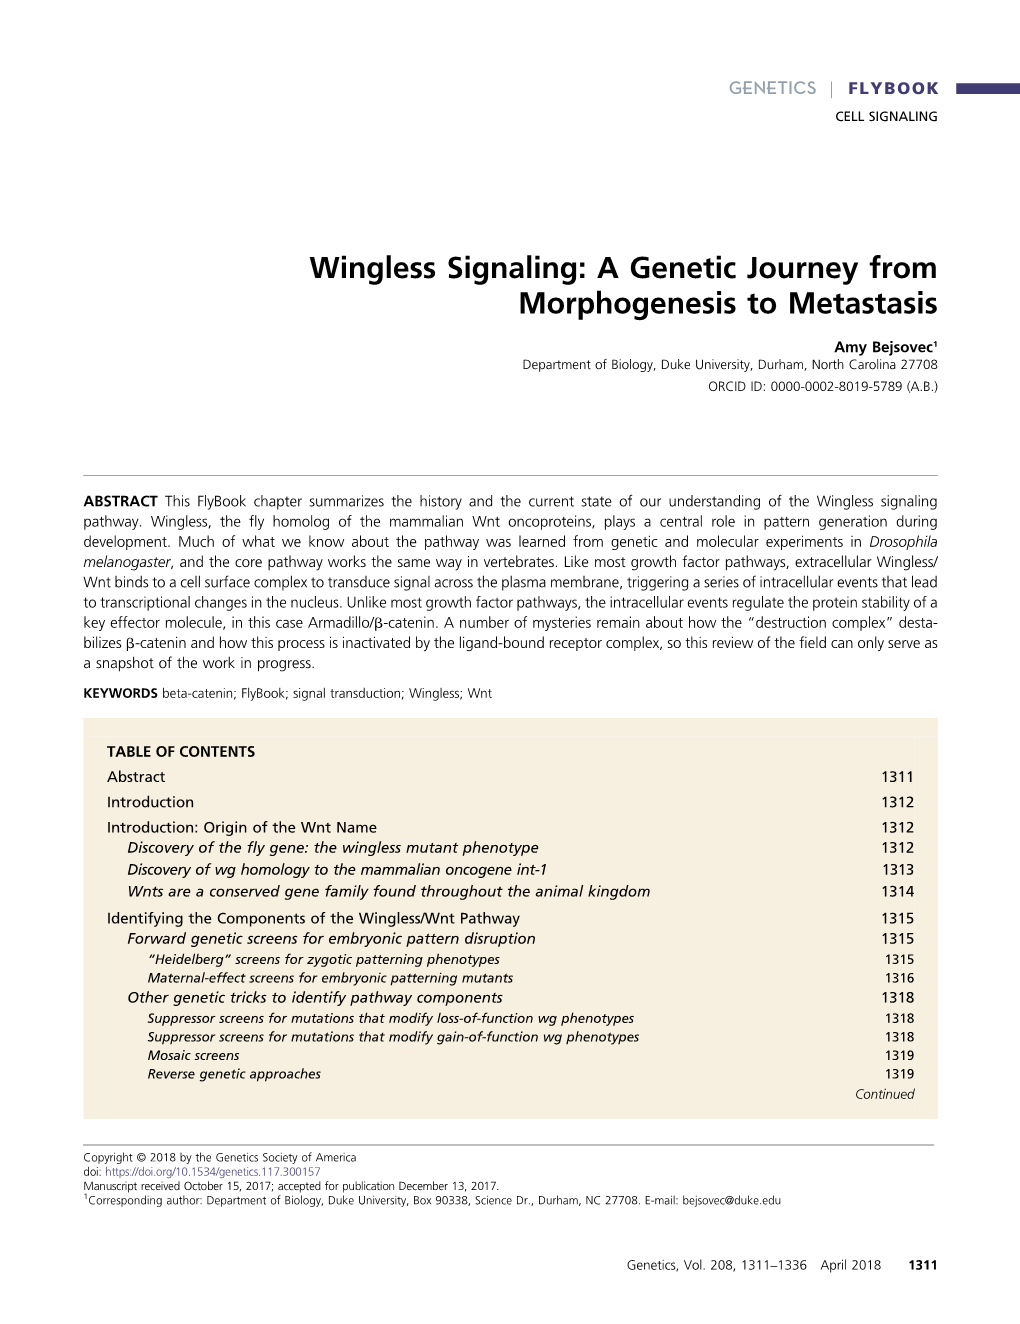 Wingless Signaling: a Genetic Journey from Morphogenesis to Metastasis